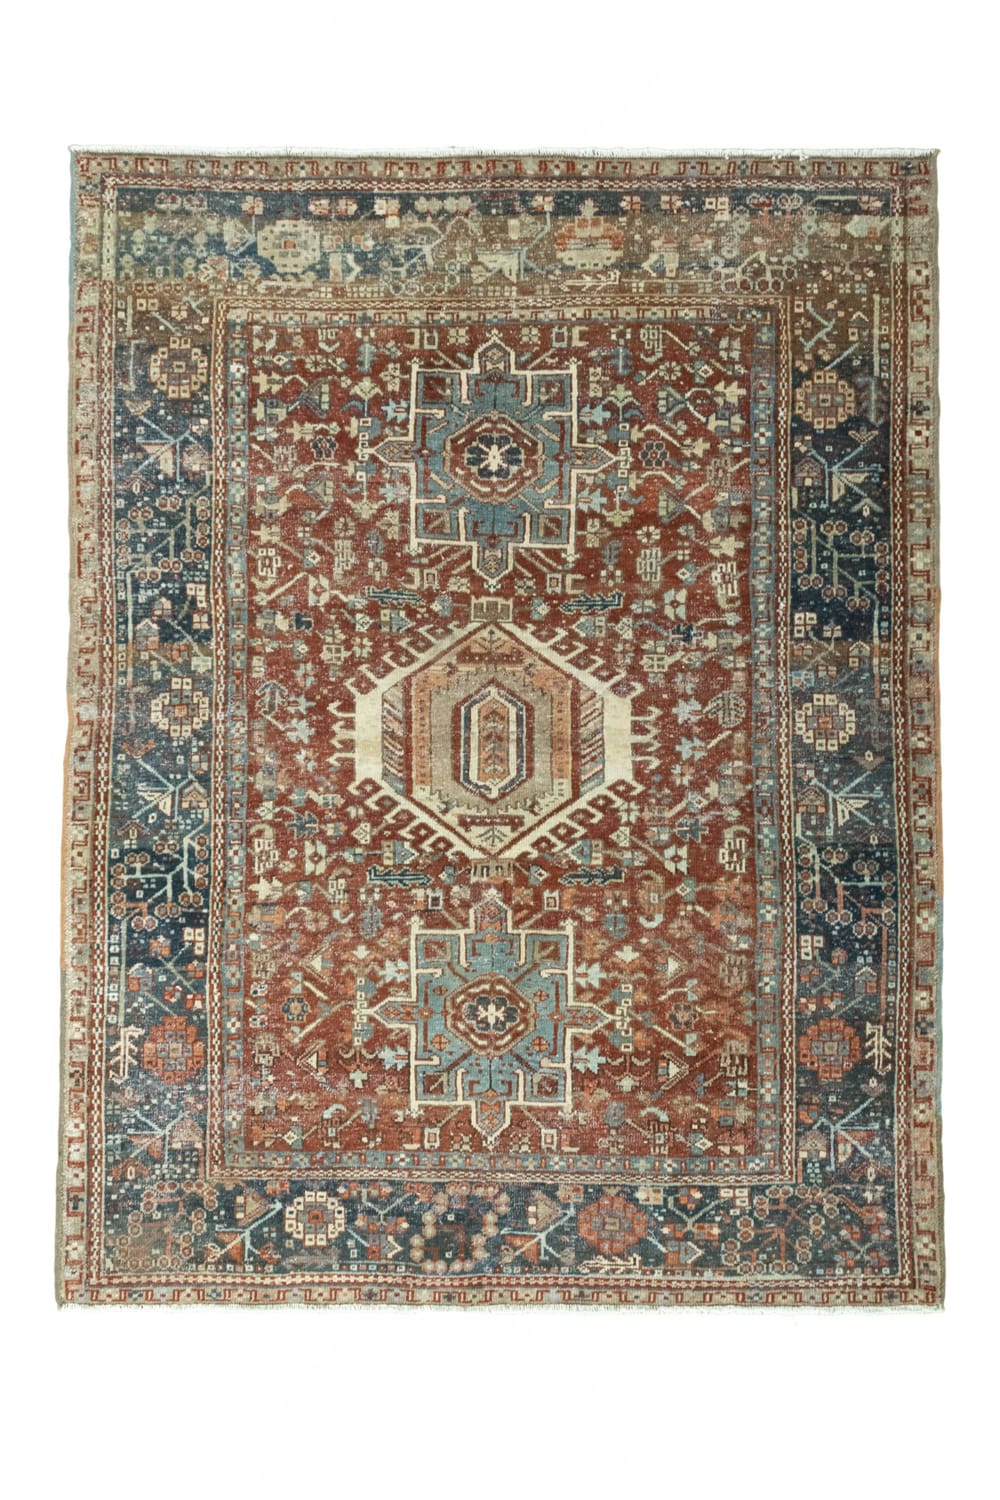 Rug# 48070, vintage Karajeh Heriz, wool pile, natural vegetable dyes, circa 1935, size 188x142 cm